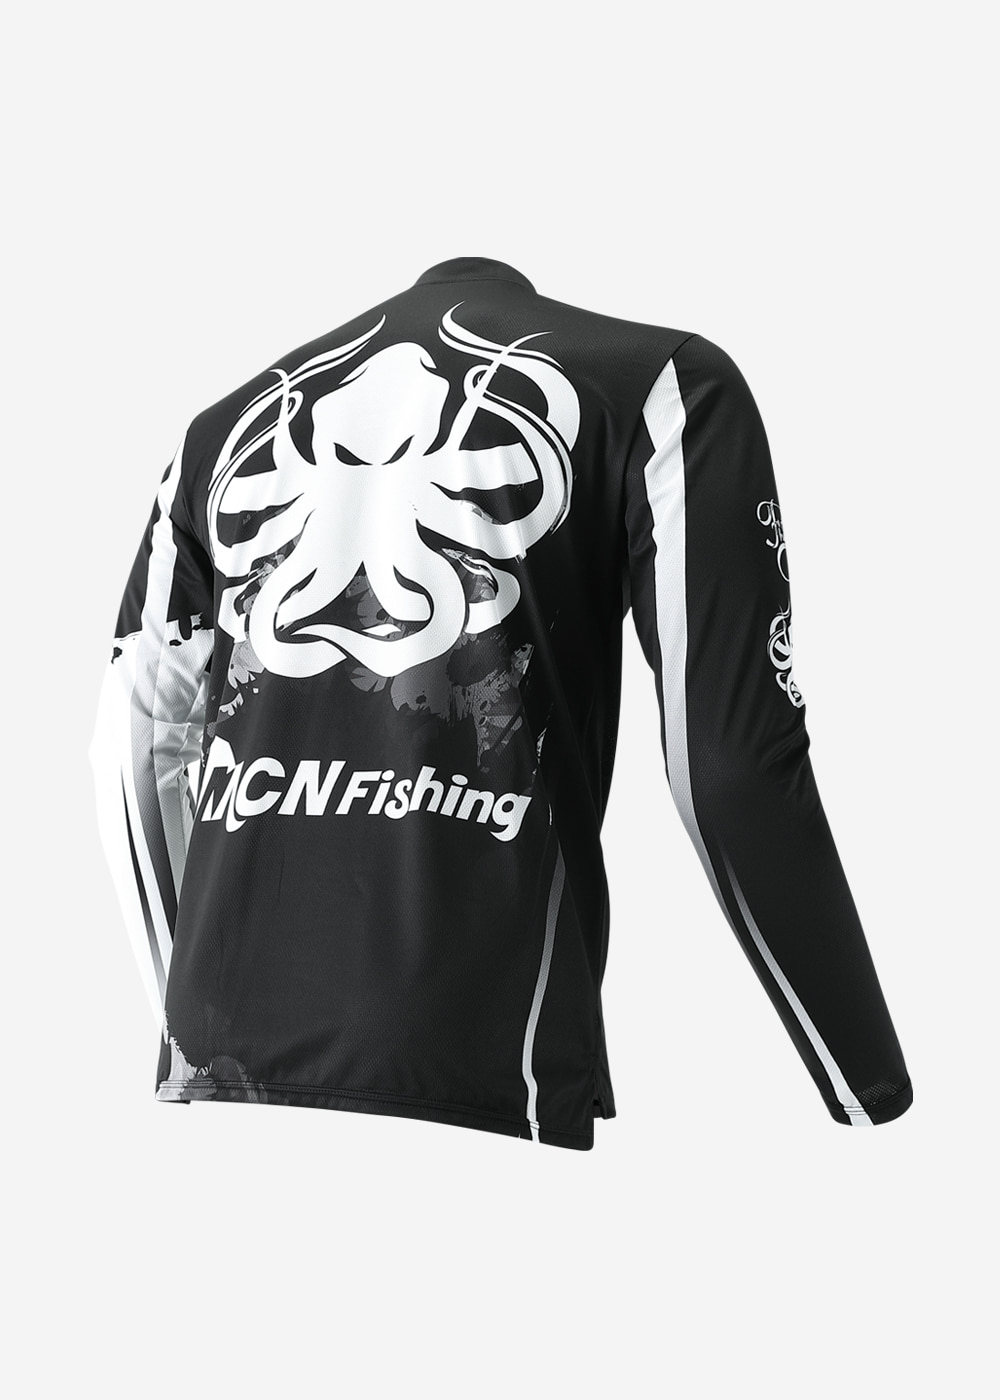 mcnfishing[MFJL-Kraken]mcn낚시단체복 크라켄 져지낚시복 낚시의류 낚시토너먼트 낚시팀복반집업 티셔츠 기능성 아웃도어웨어